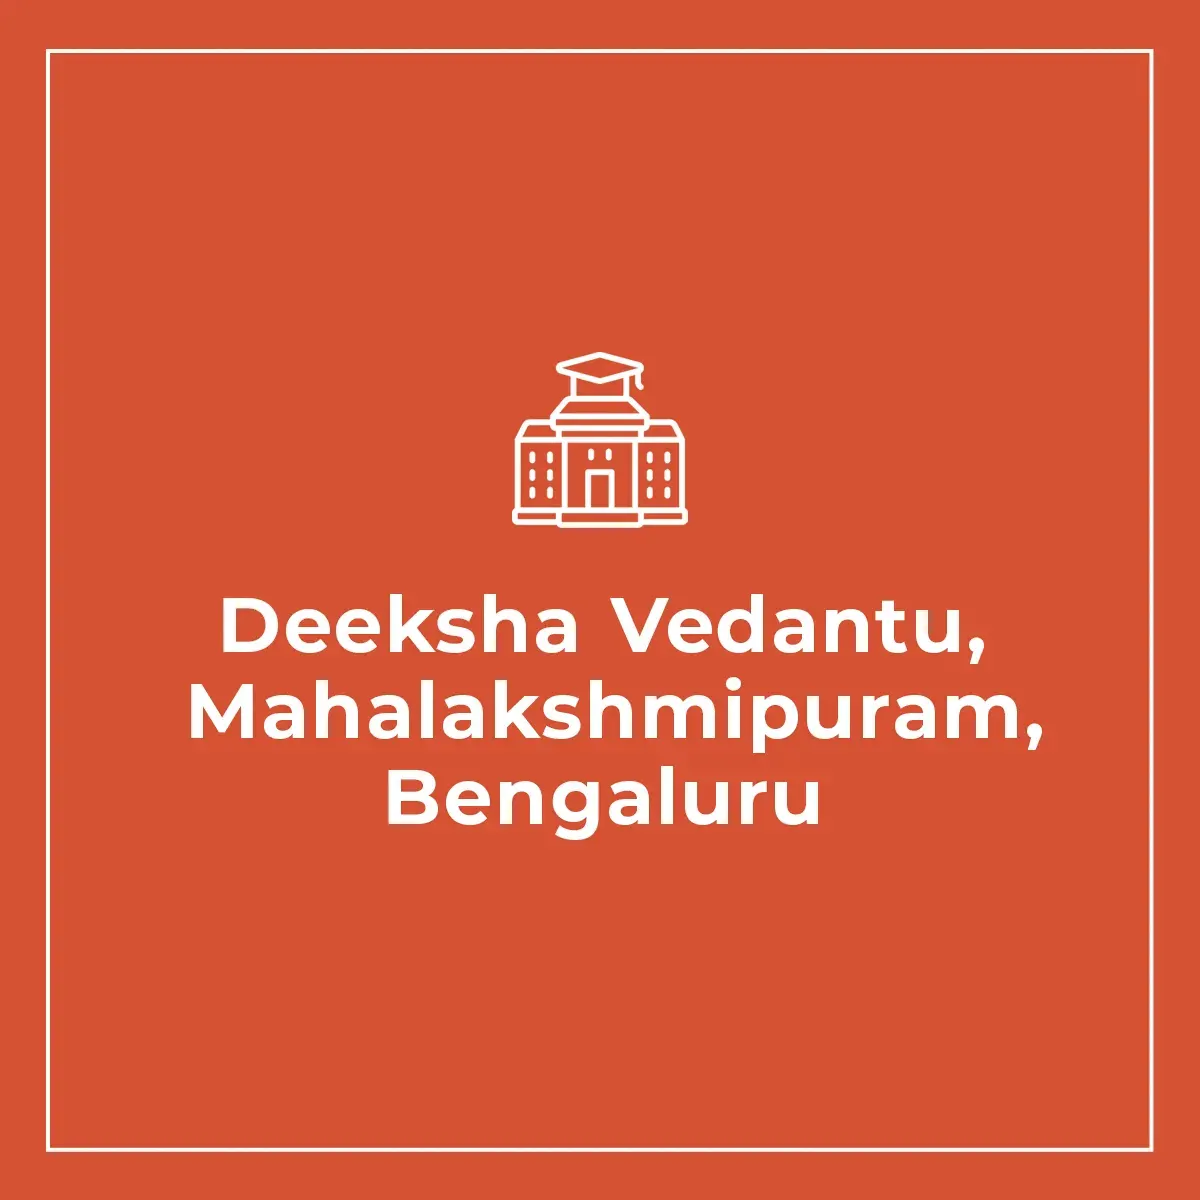 Deeksha Vedantu, Mahalakshmipuram, Bengaluru